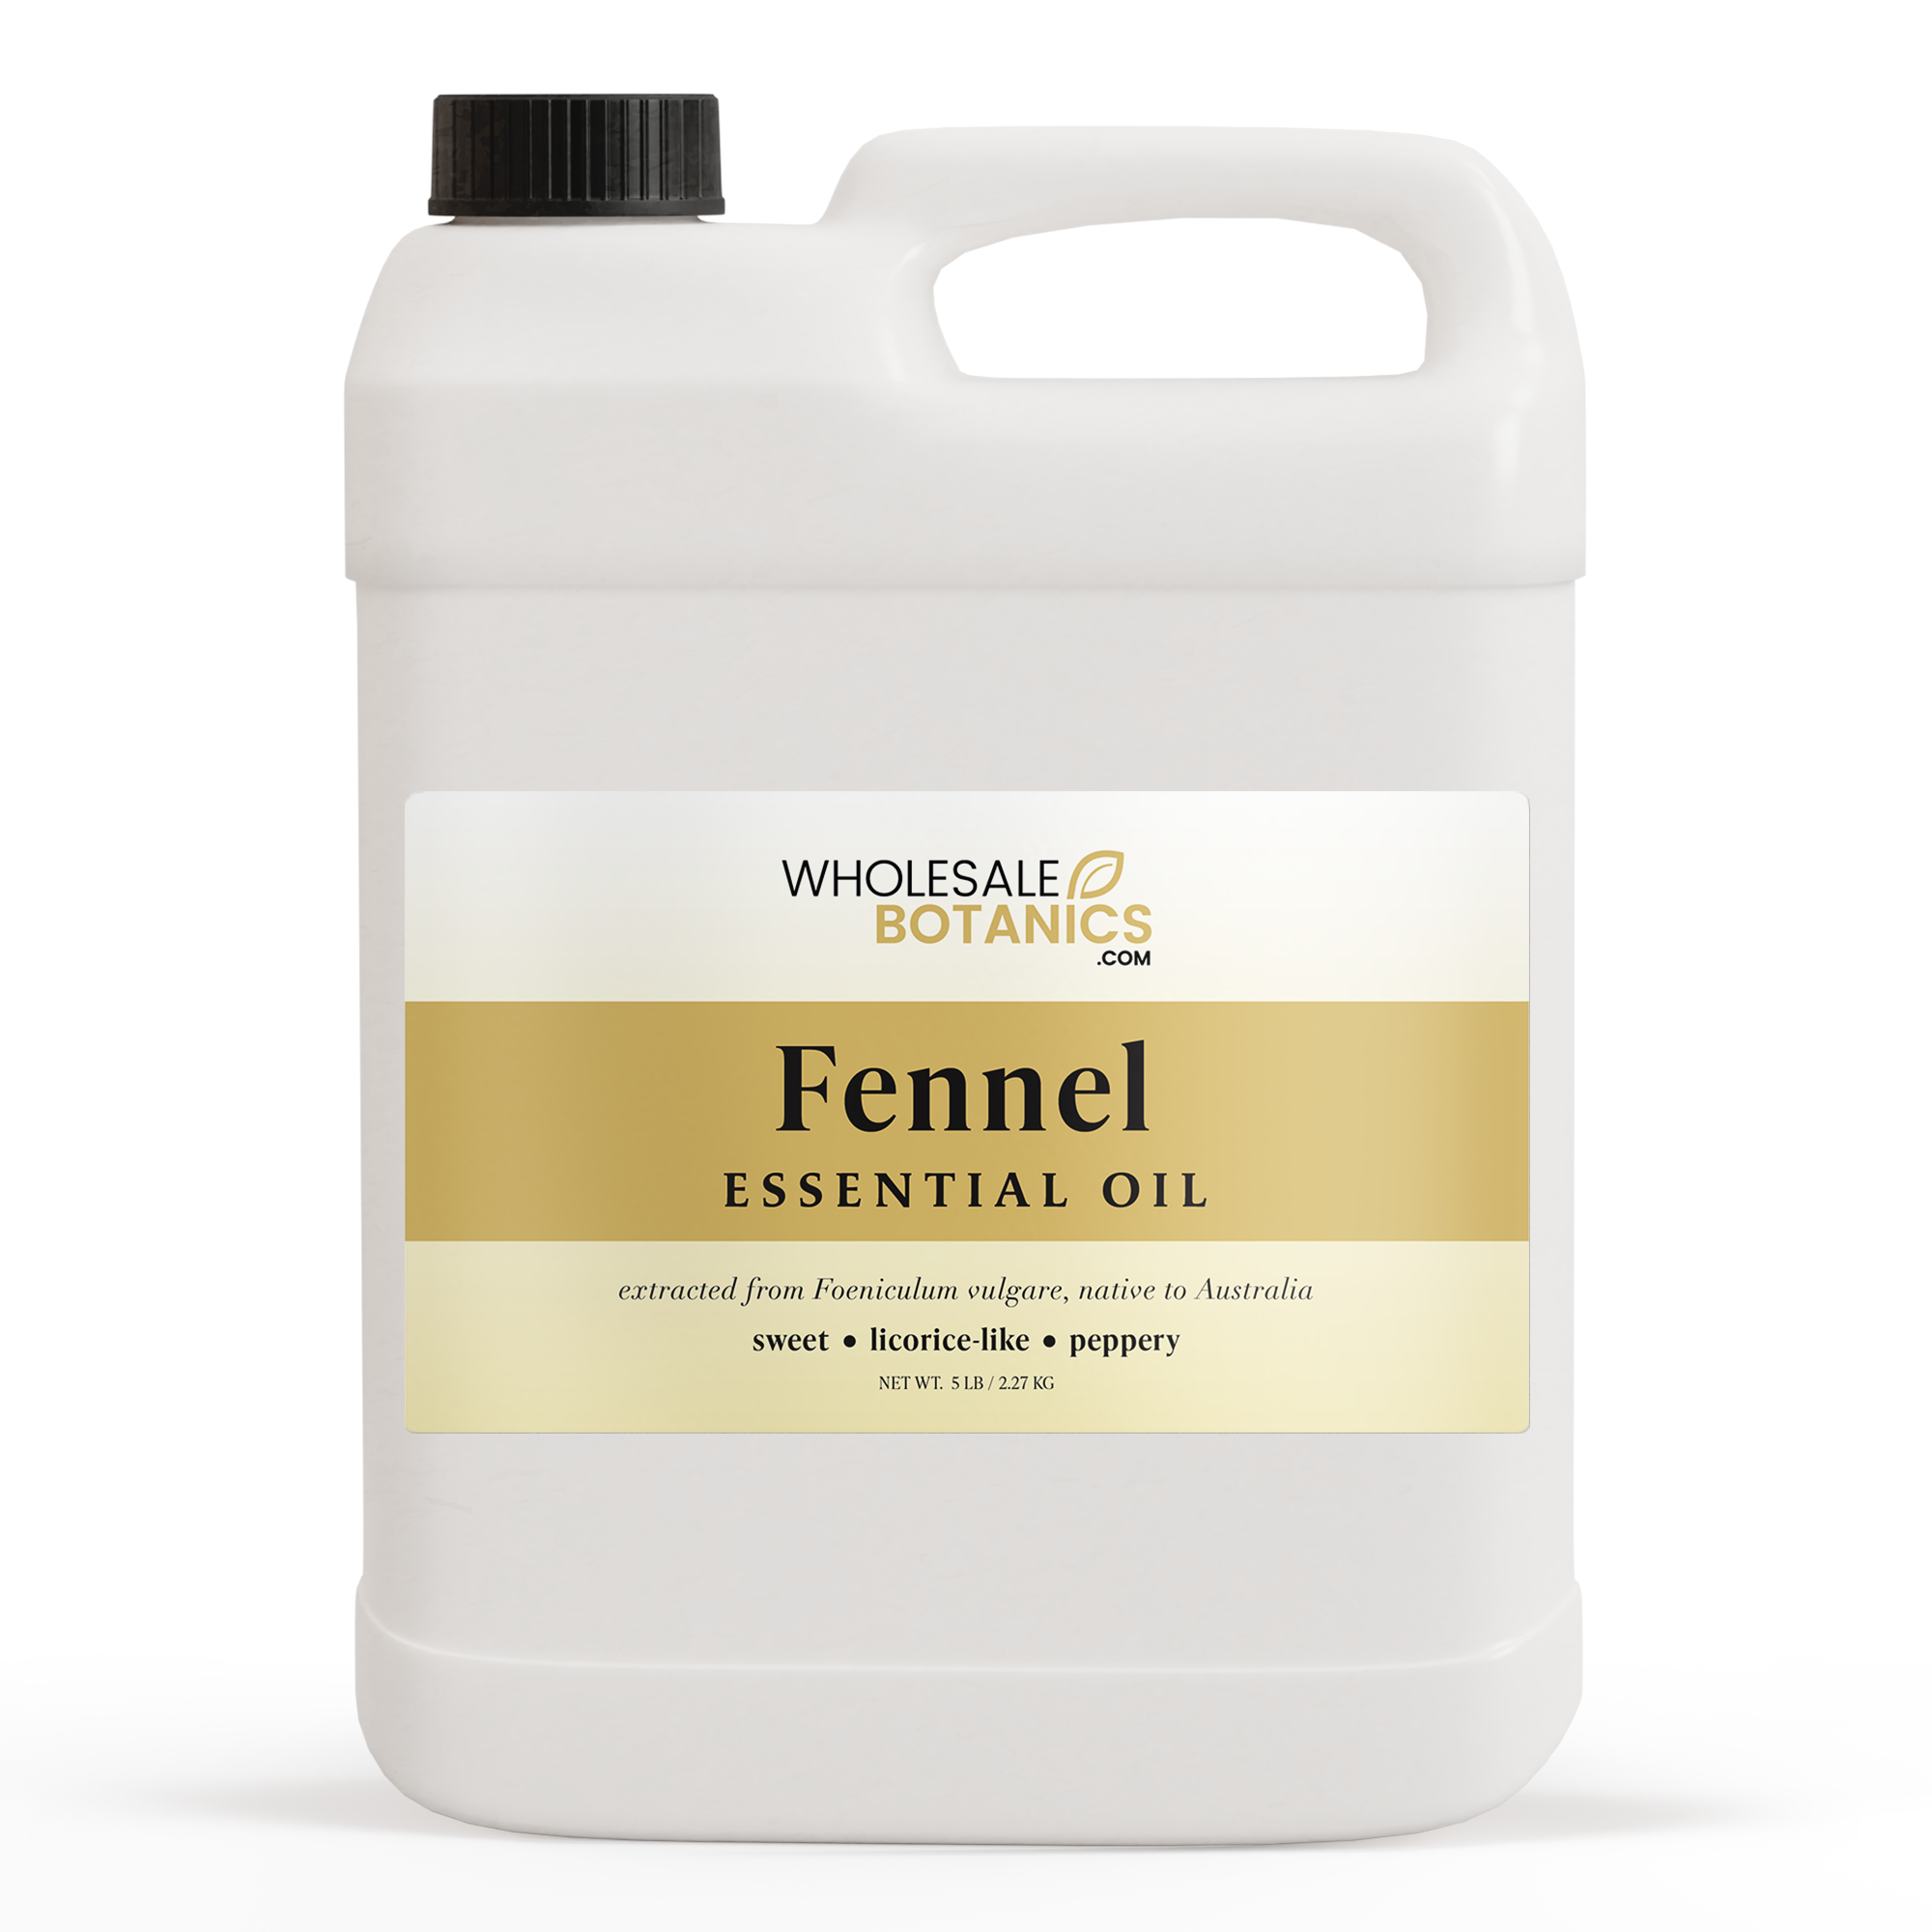 Fennel (sweet) Essential Oil